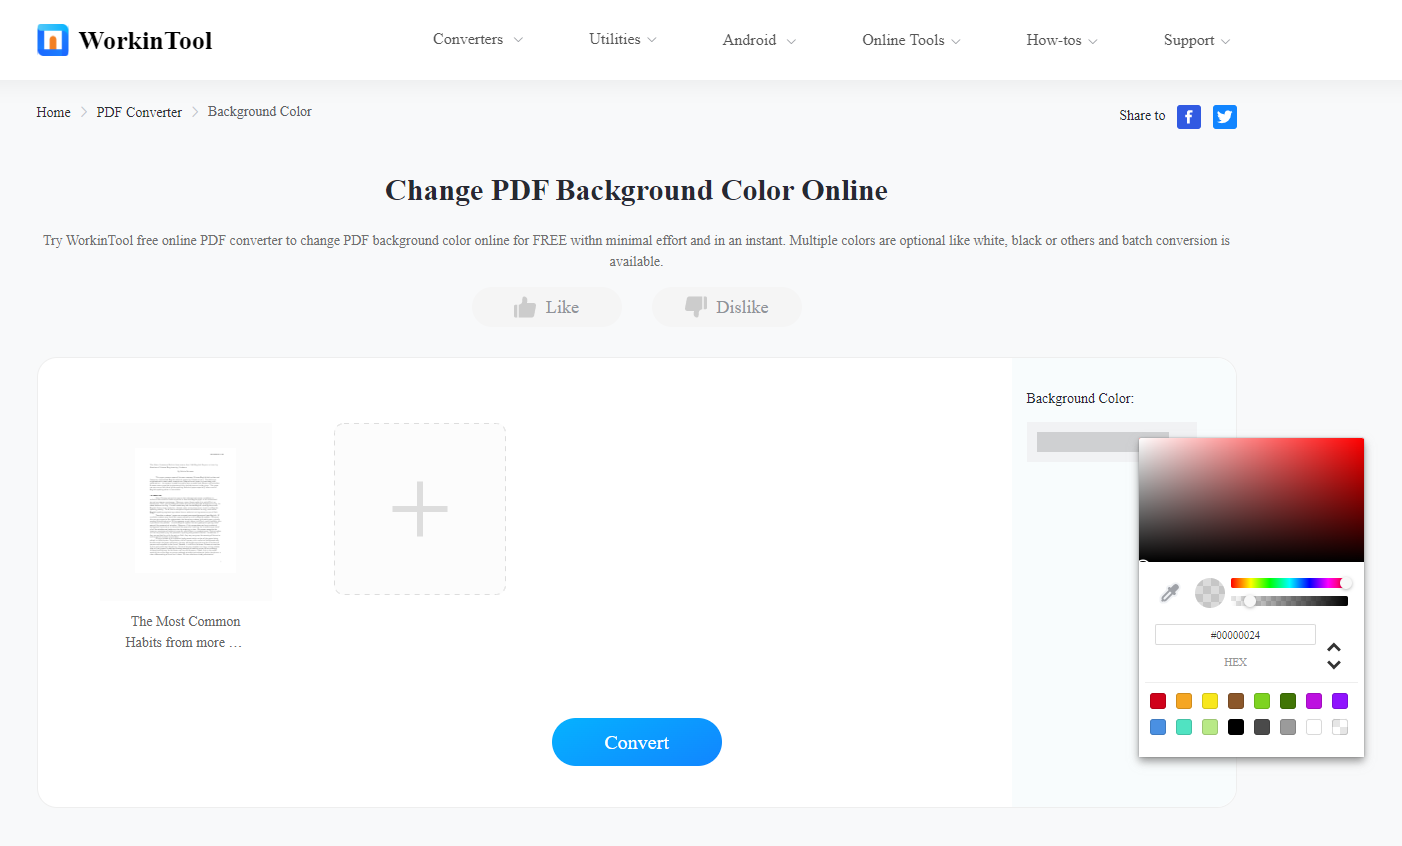 Change PDF Background Color Using WorkinTool